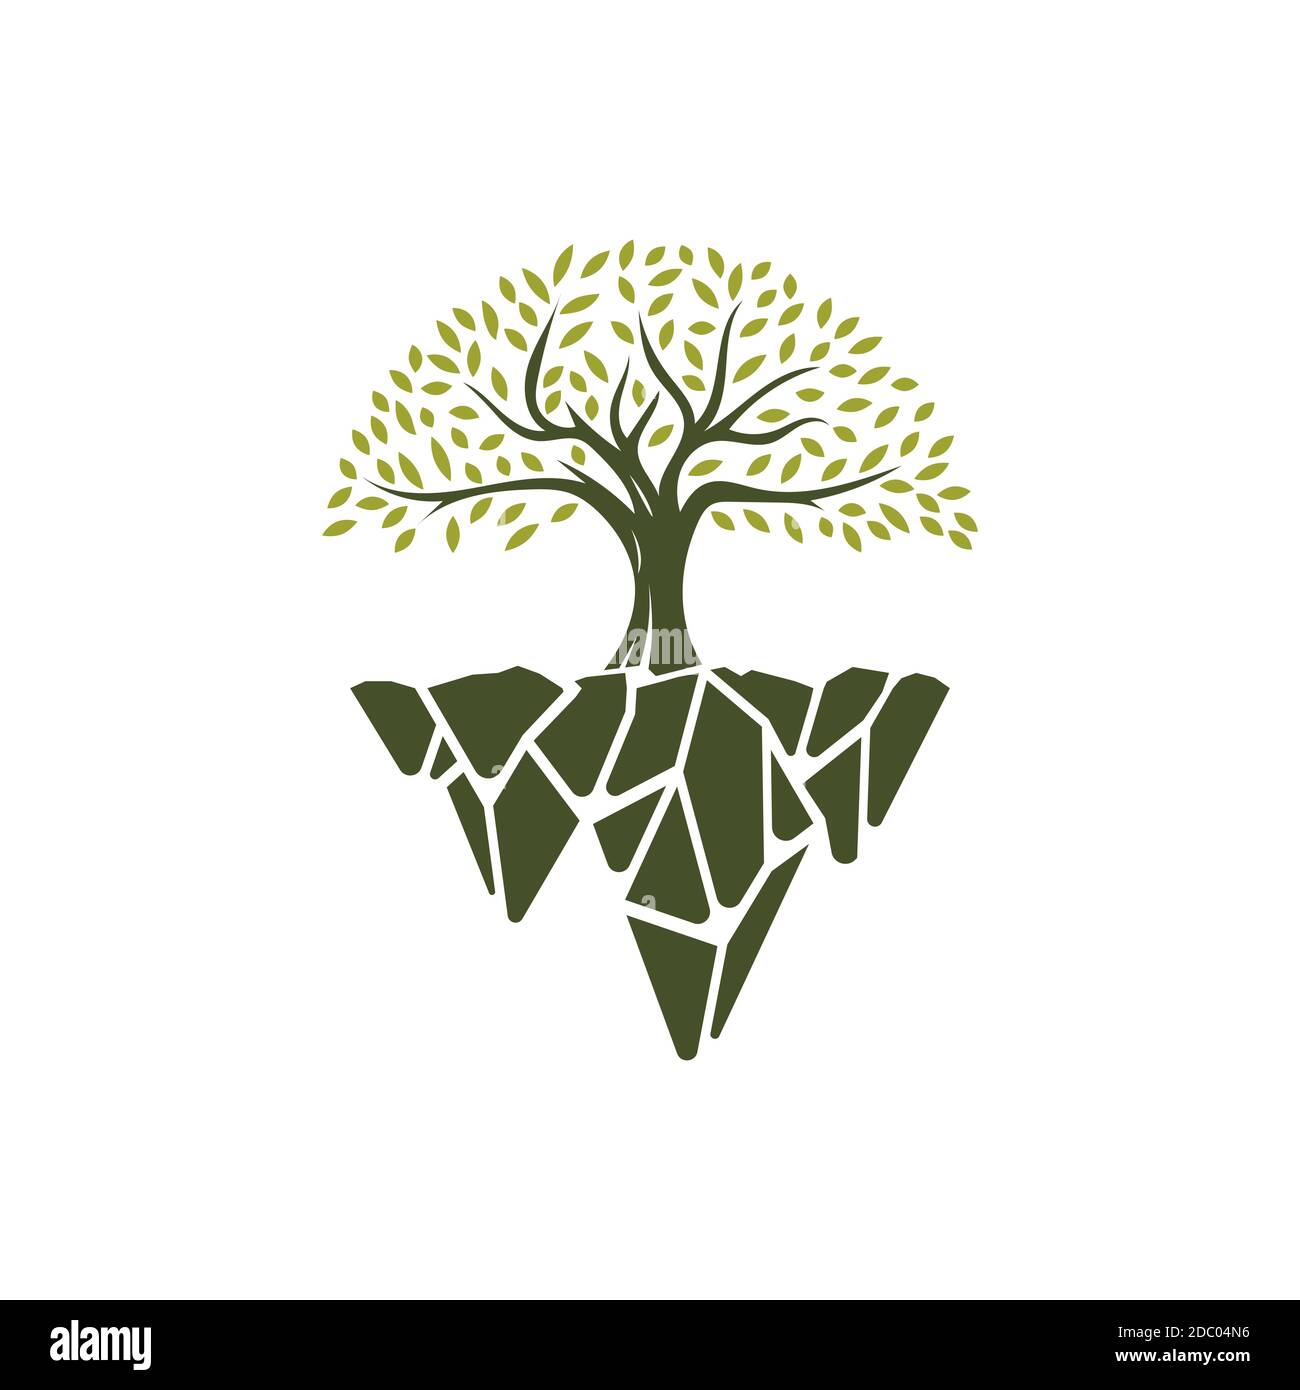 Dream tree logo illustration logo design template.Tree on the sky icon Stock Vector